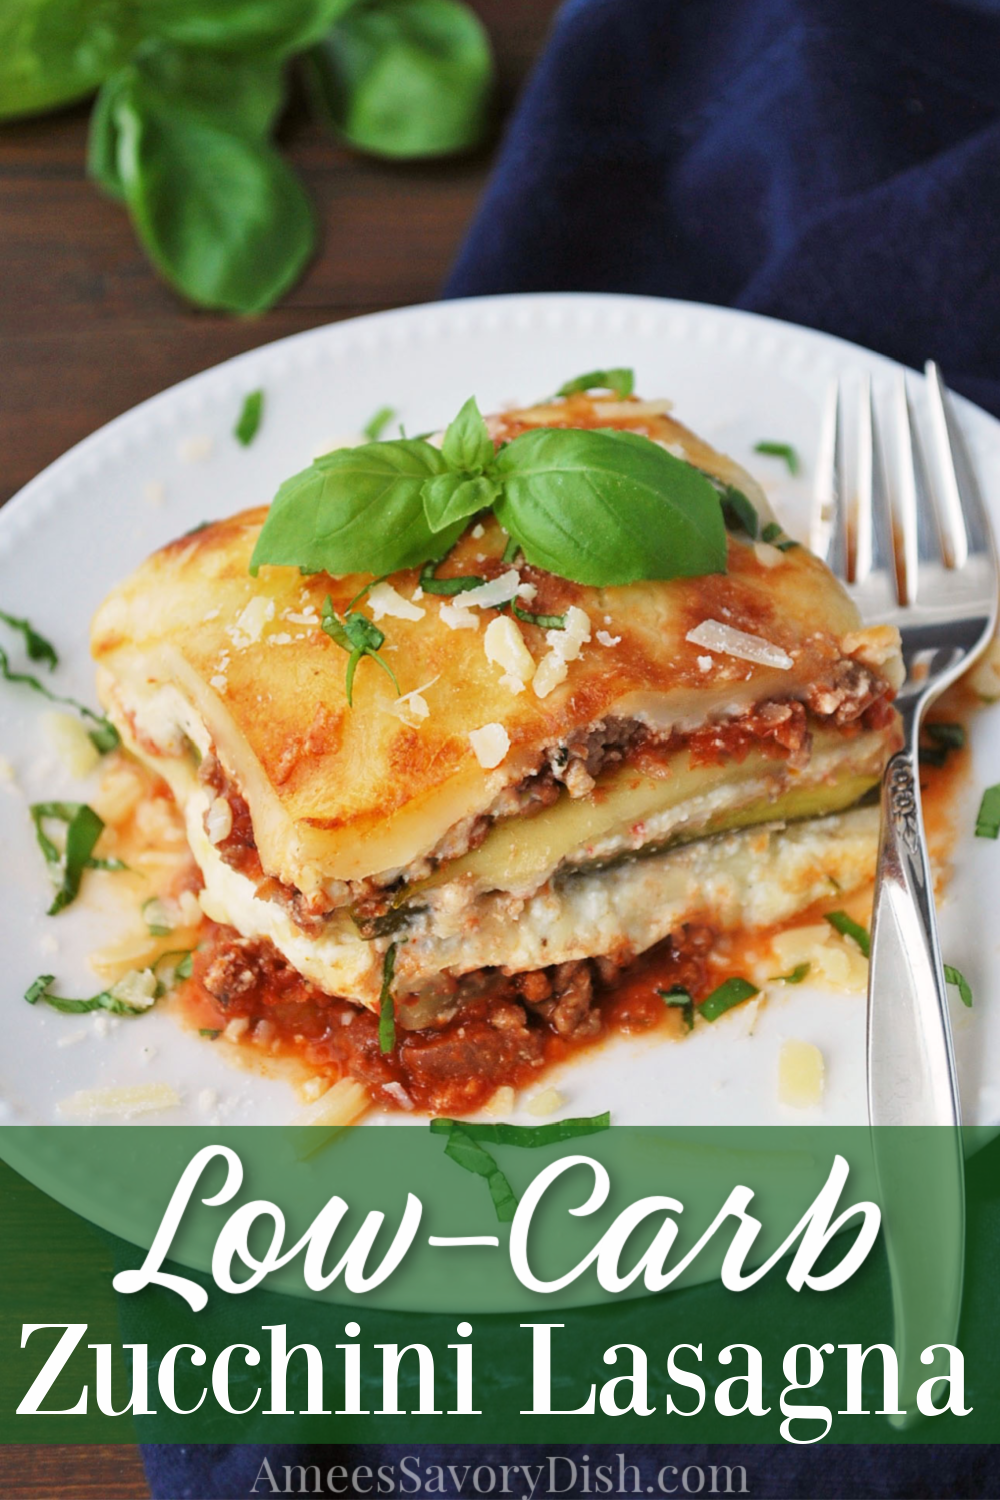 Healthier Zucchini Lasagna Recipe |Amee's Savory Dish